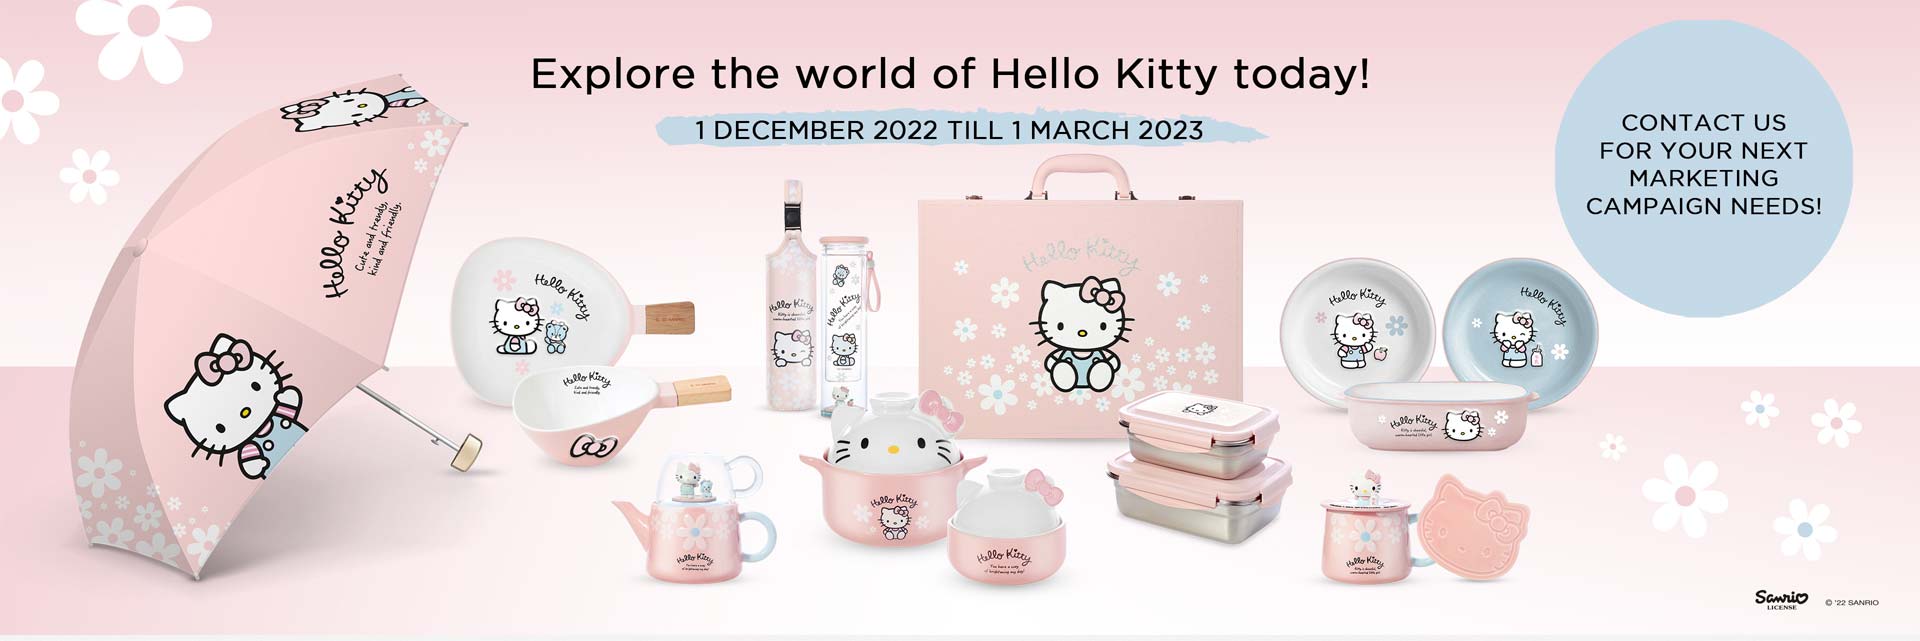 Axxel_Hello-Kitty-Banner_1920x641.jpg